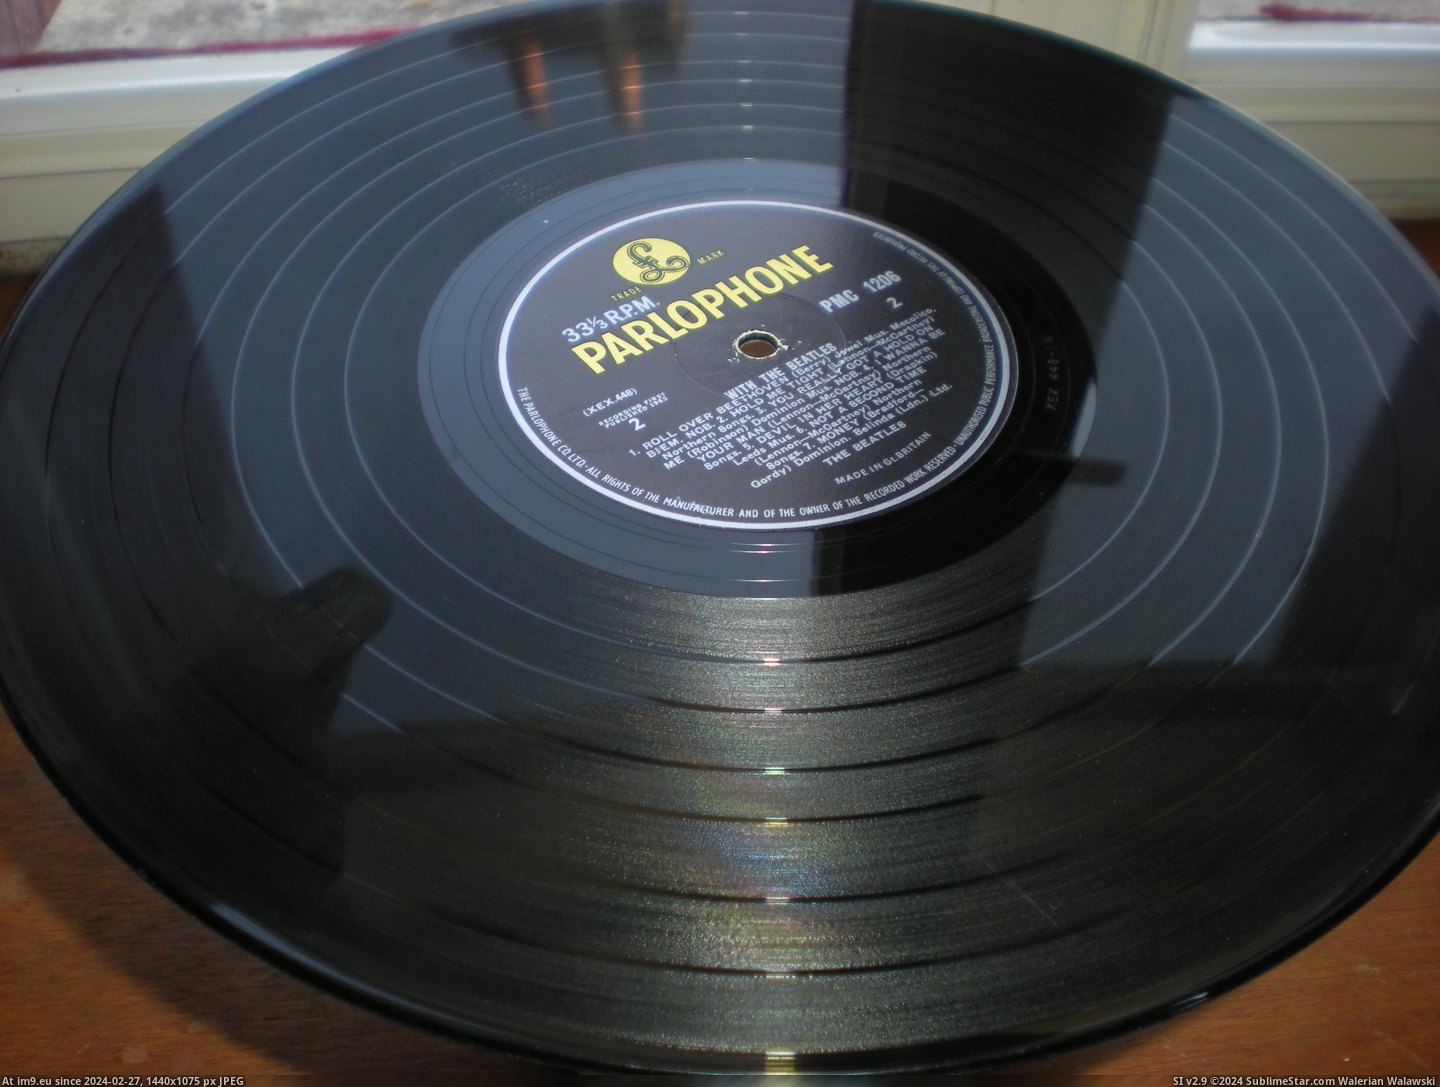 #Records #Vinyl #Record With The 22-8 4 Pic. (Bild von album new 1))